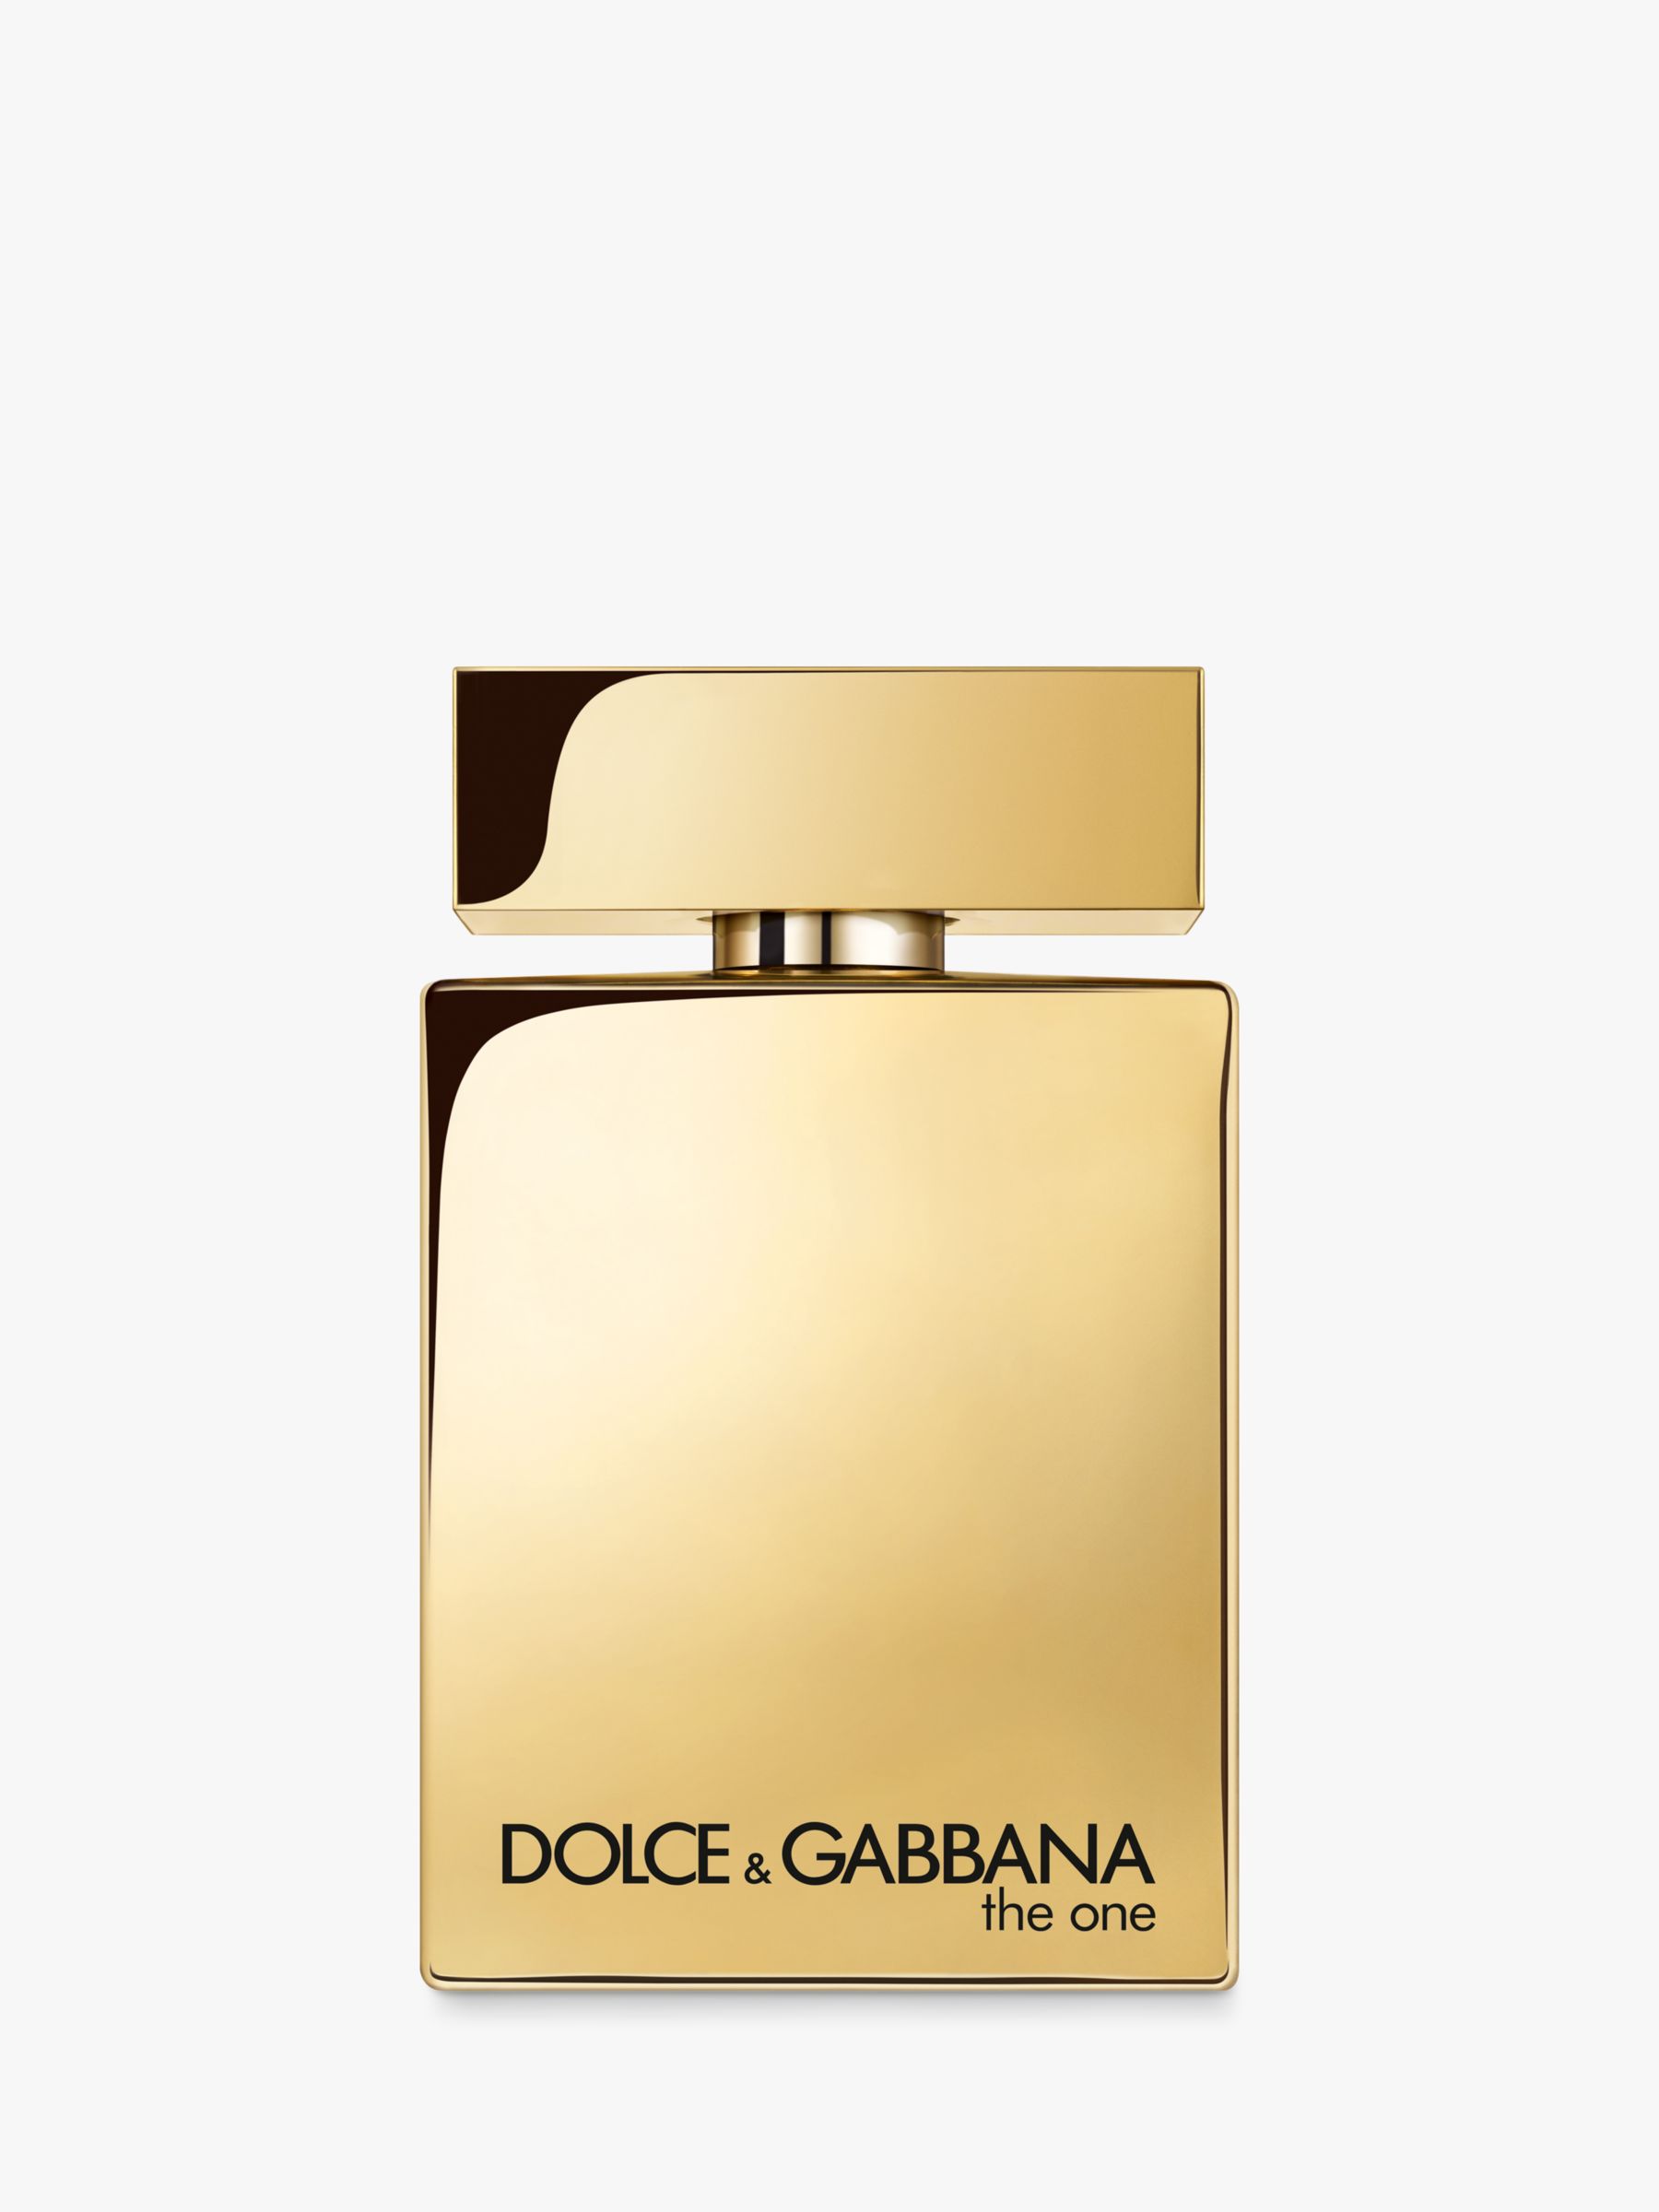 Regan Leia een beetje Dolce & Gabbana The One for Men Gold Eau de Parfum, 100ml